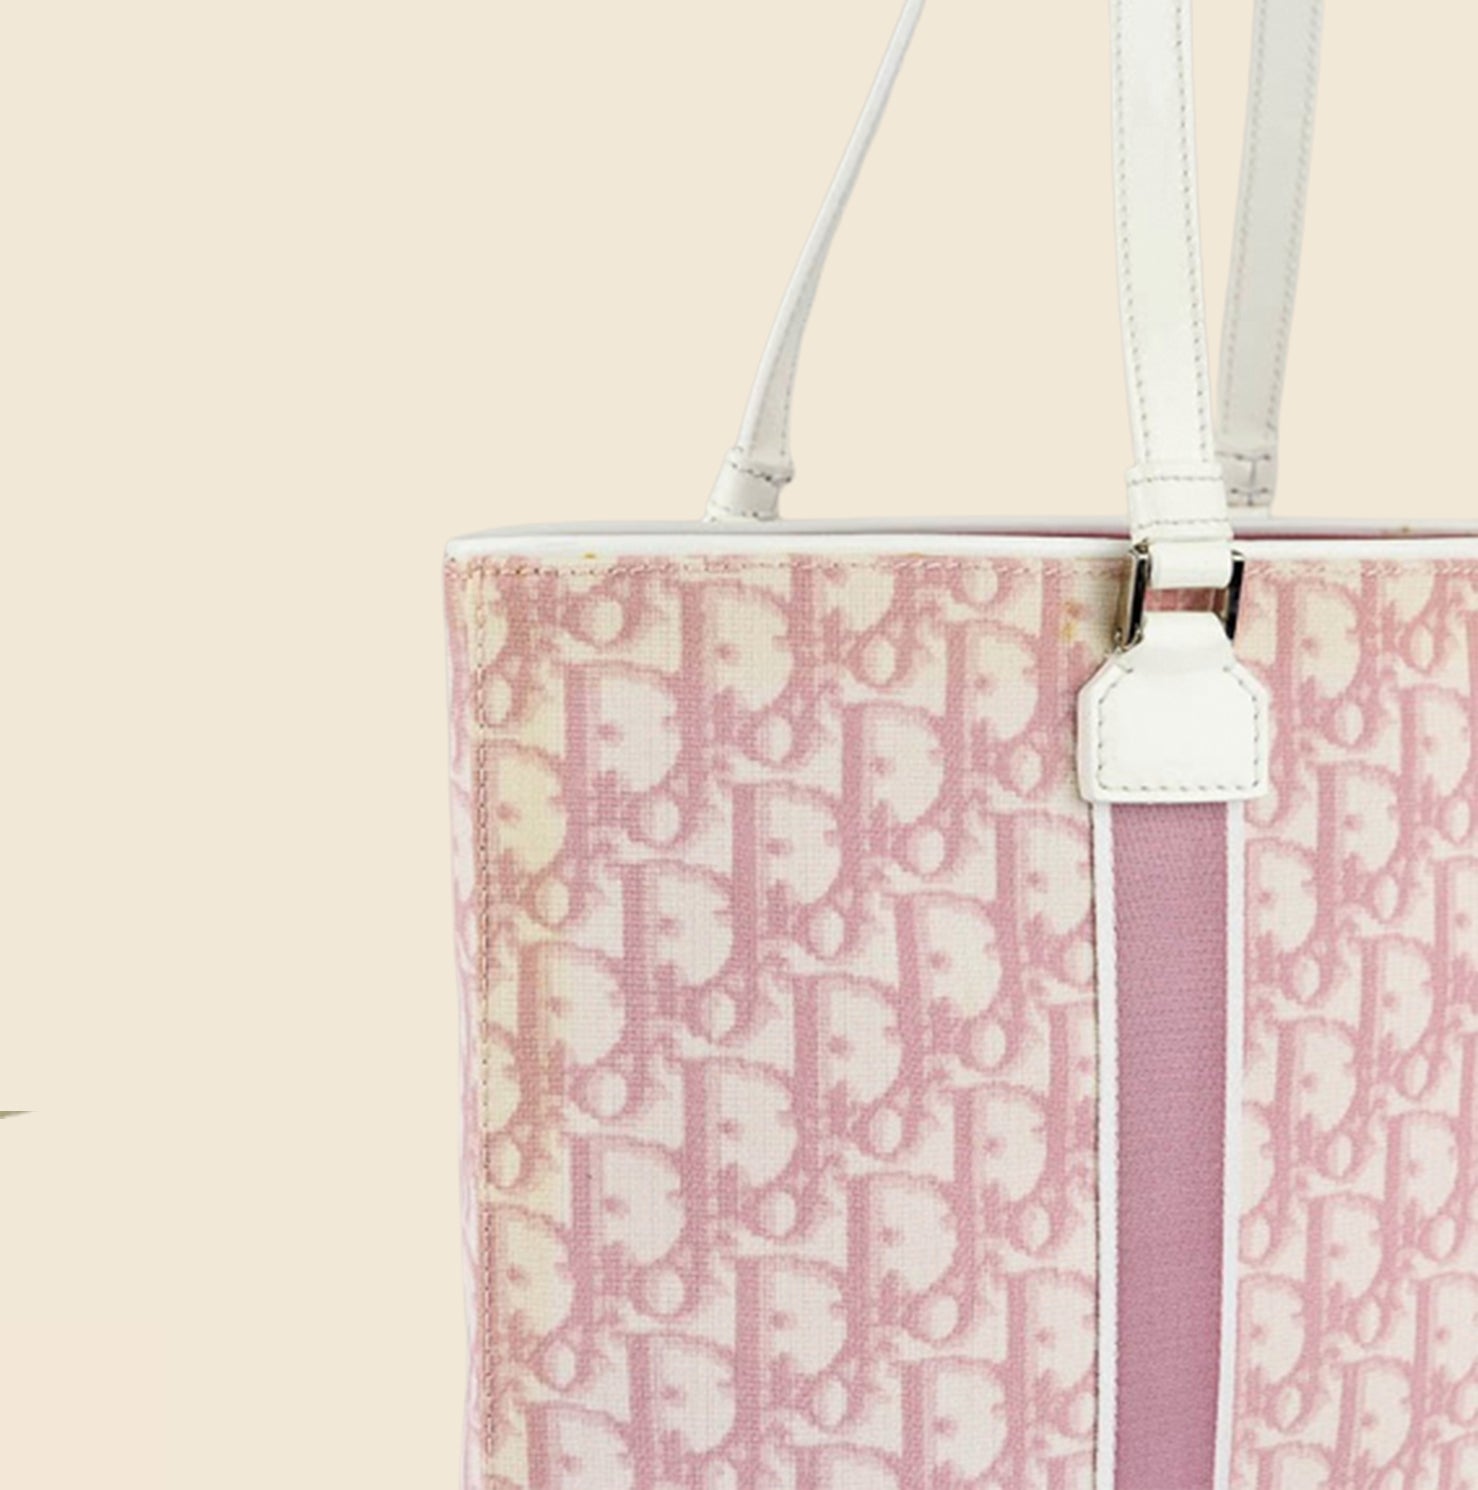 Dior Romantique Pochette | Handbag essentials, Girly bags, Fashion bags